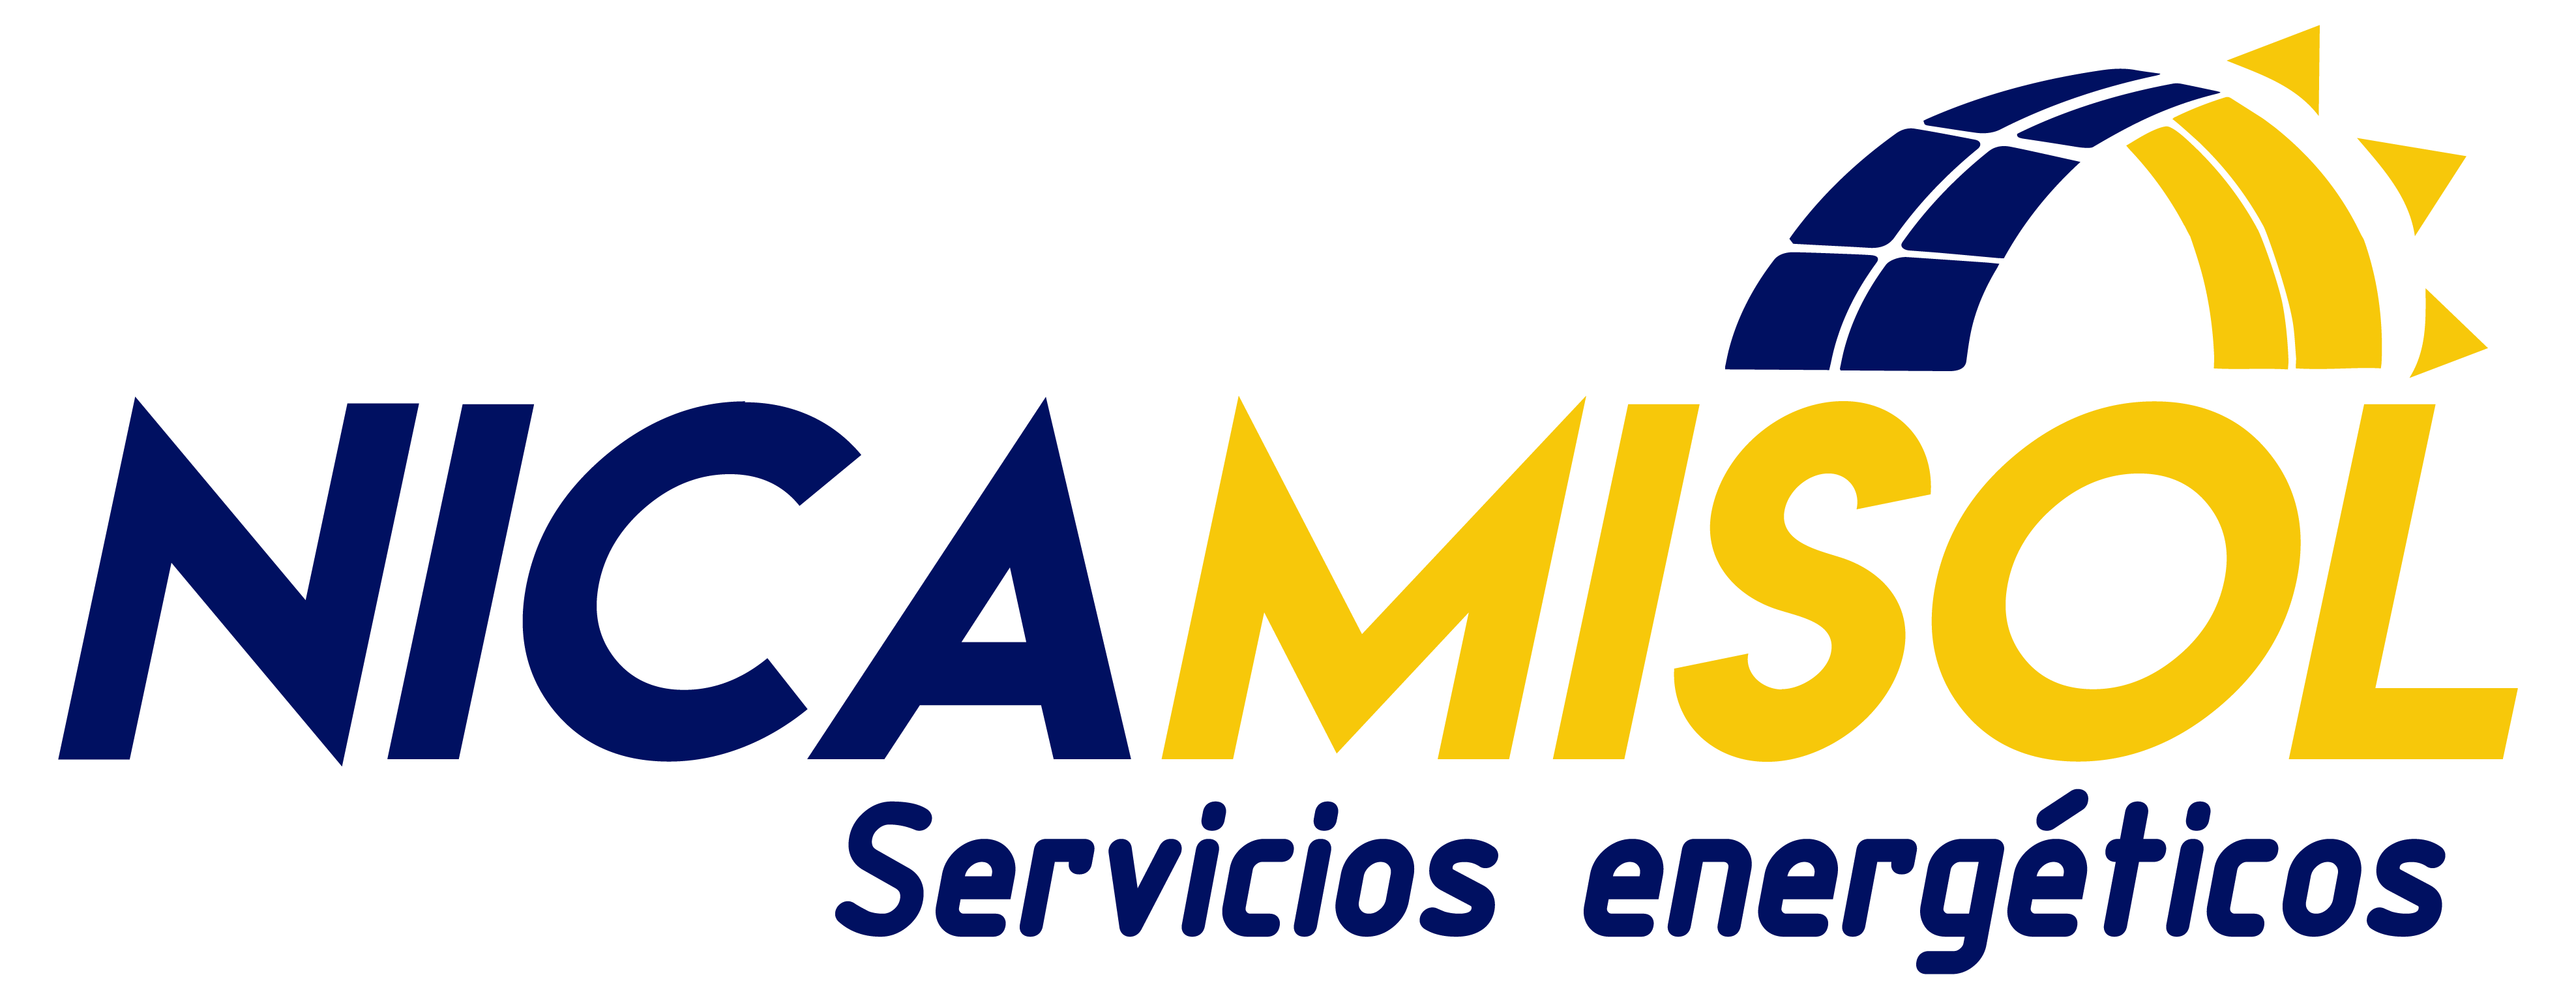 NICAMISOL Logo